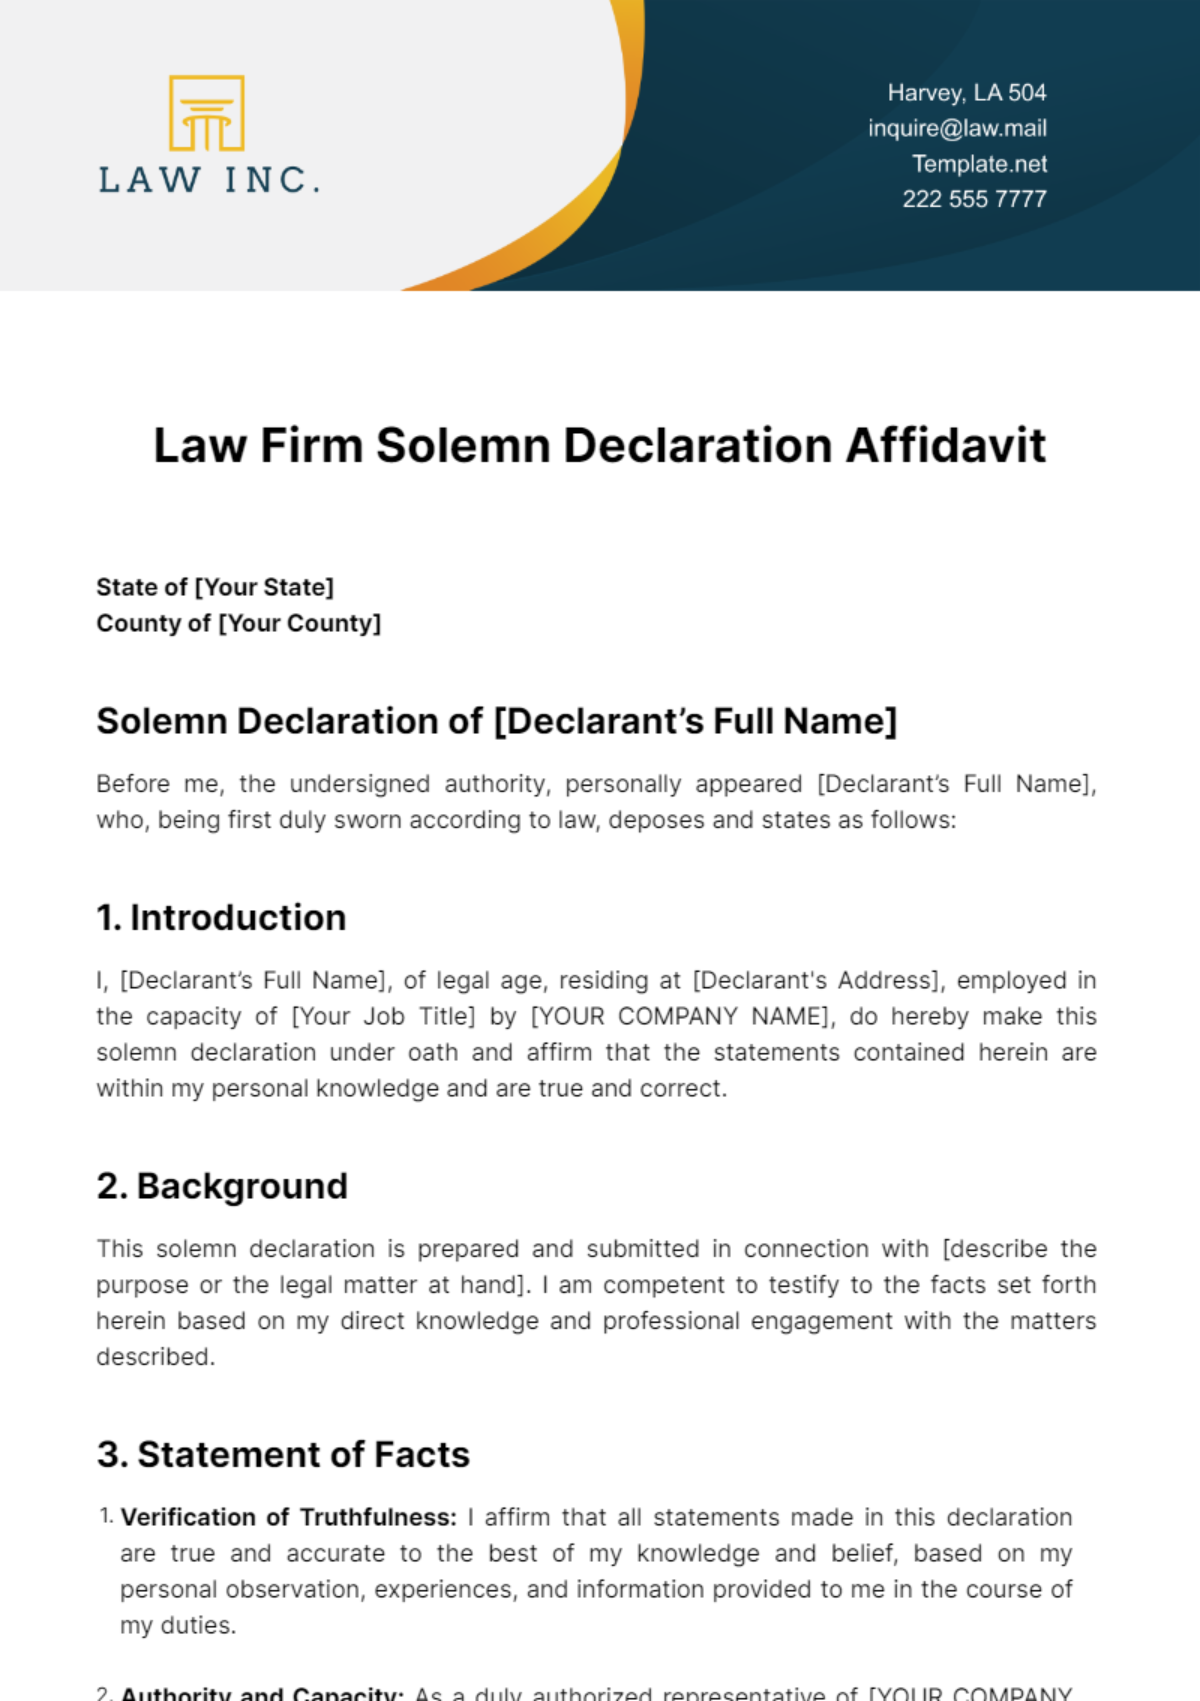 Free Law Firm Solemn Declaration Affidavit Template